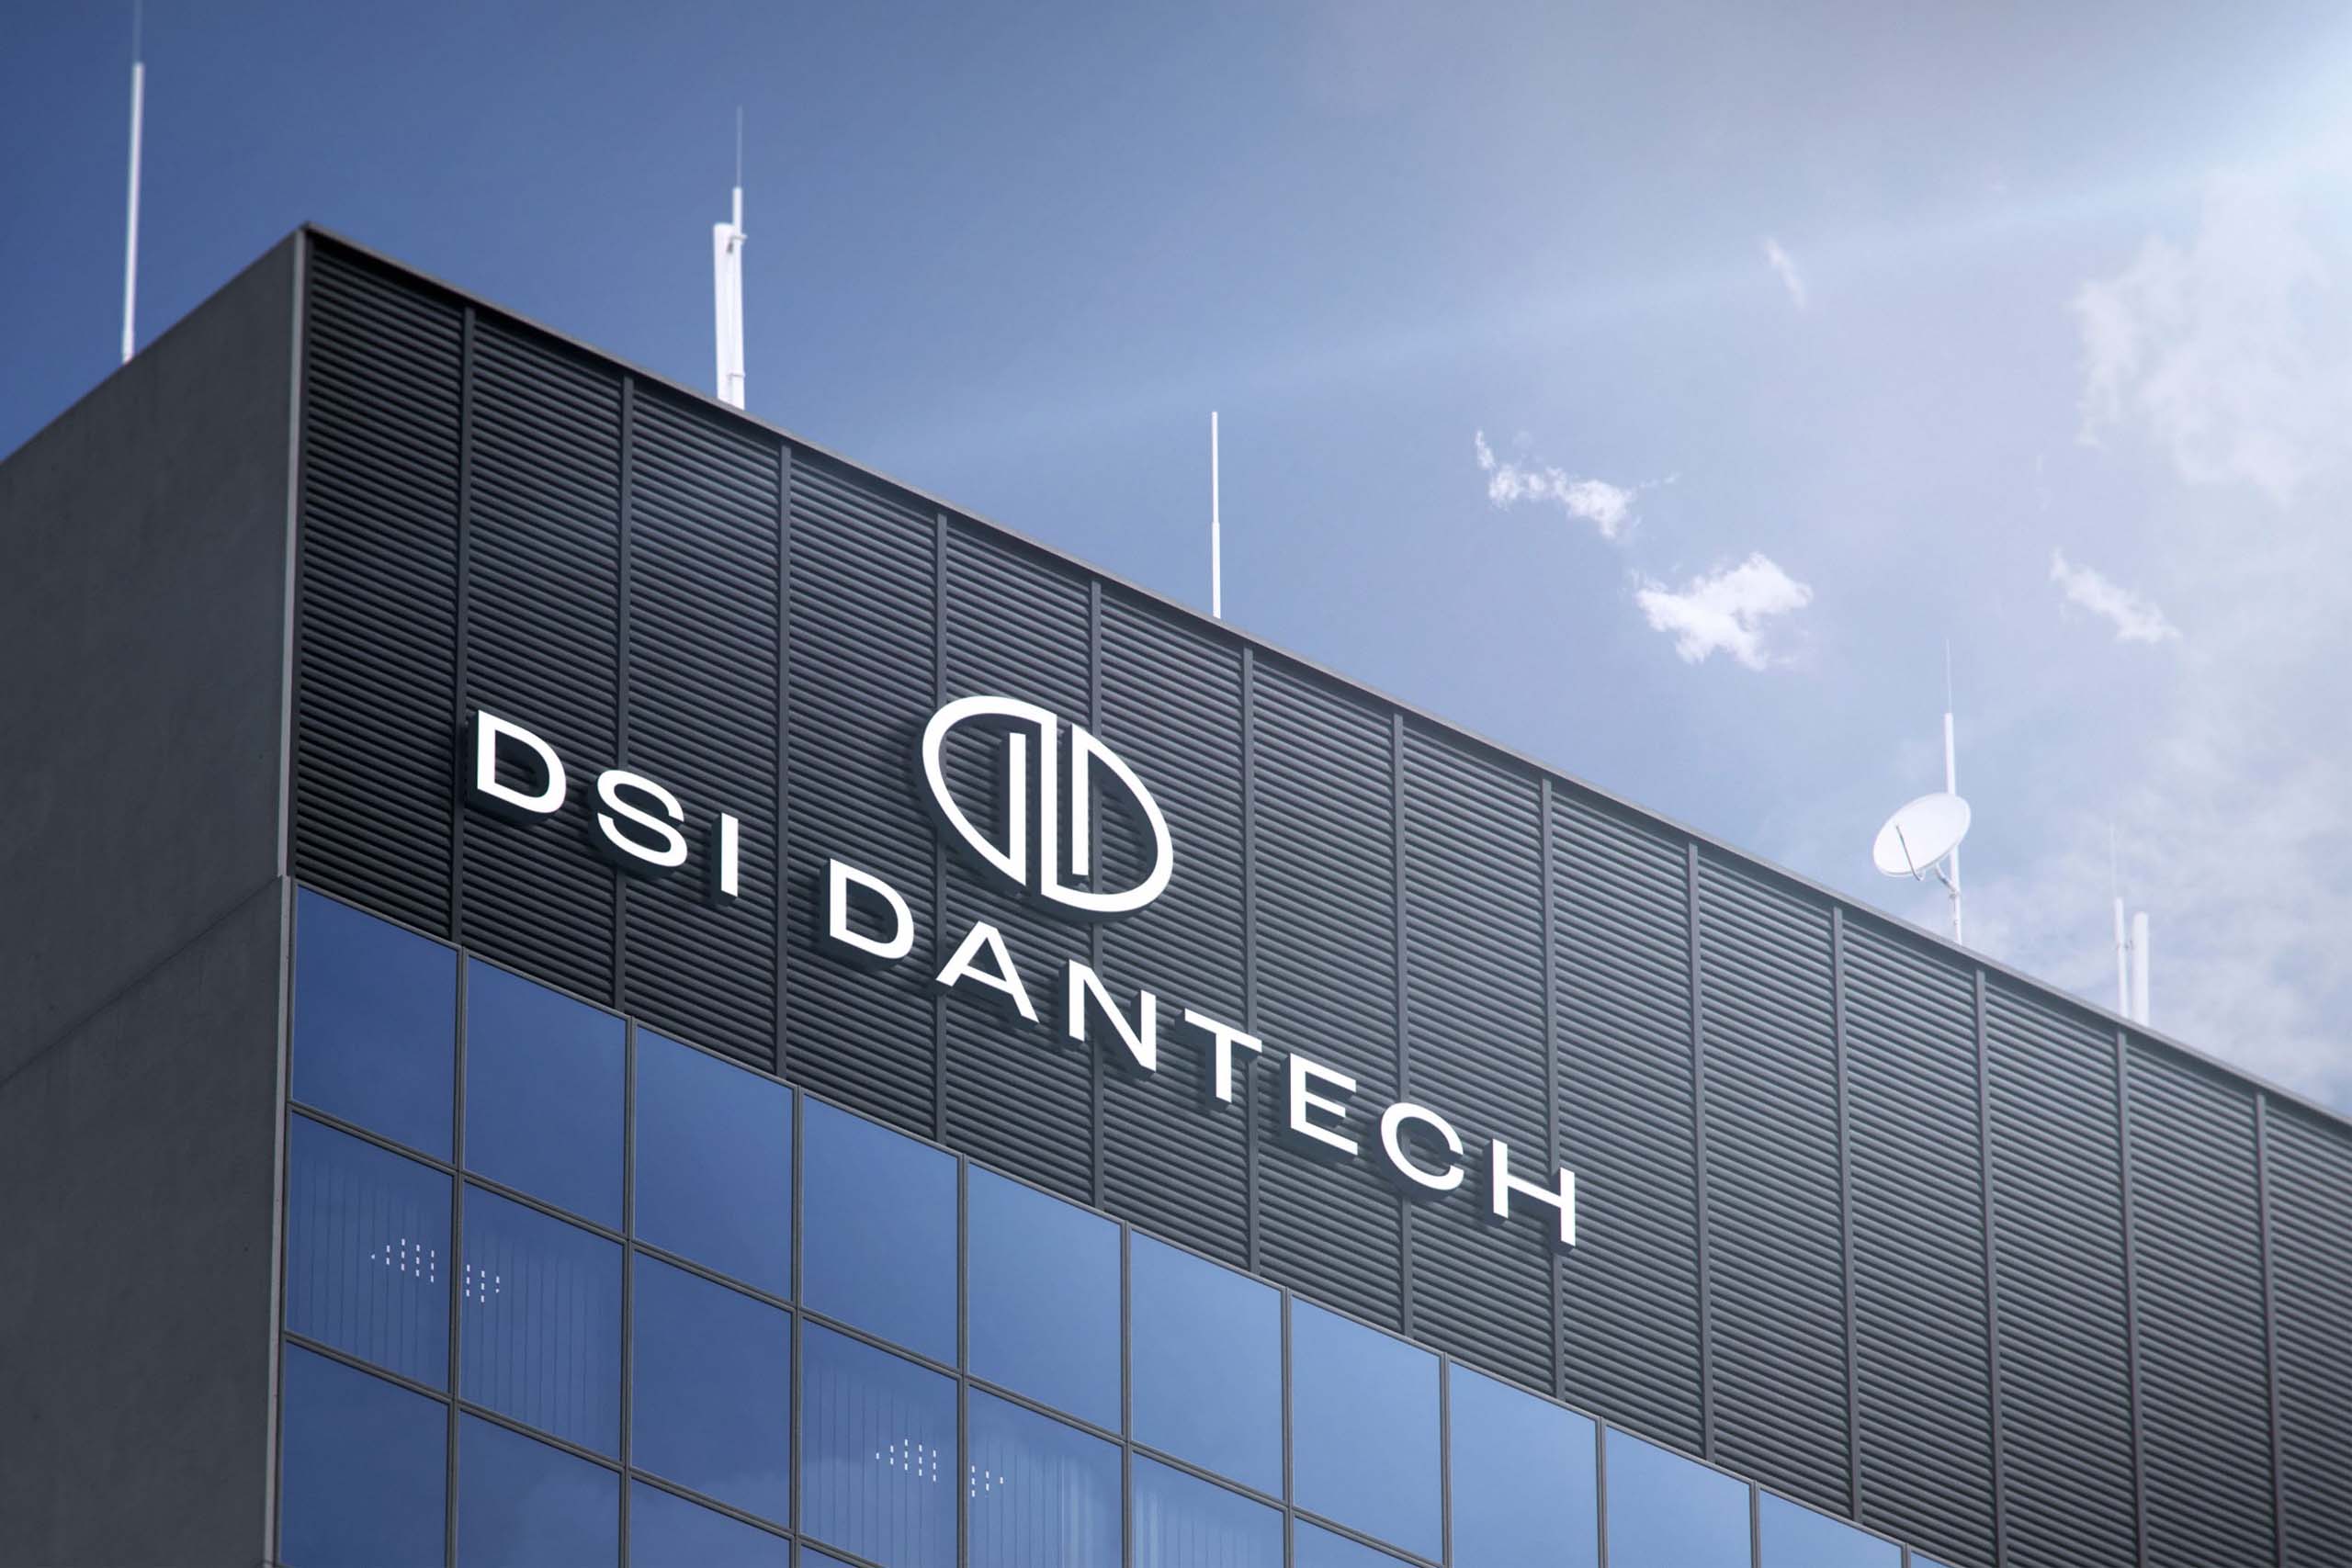 Introducing DSI Dantech: A bigger fish in the sea